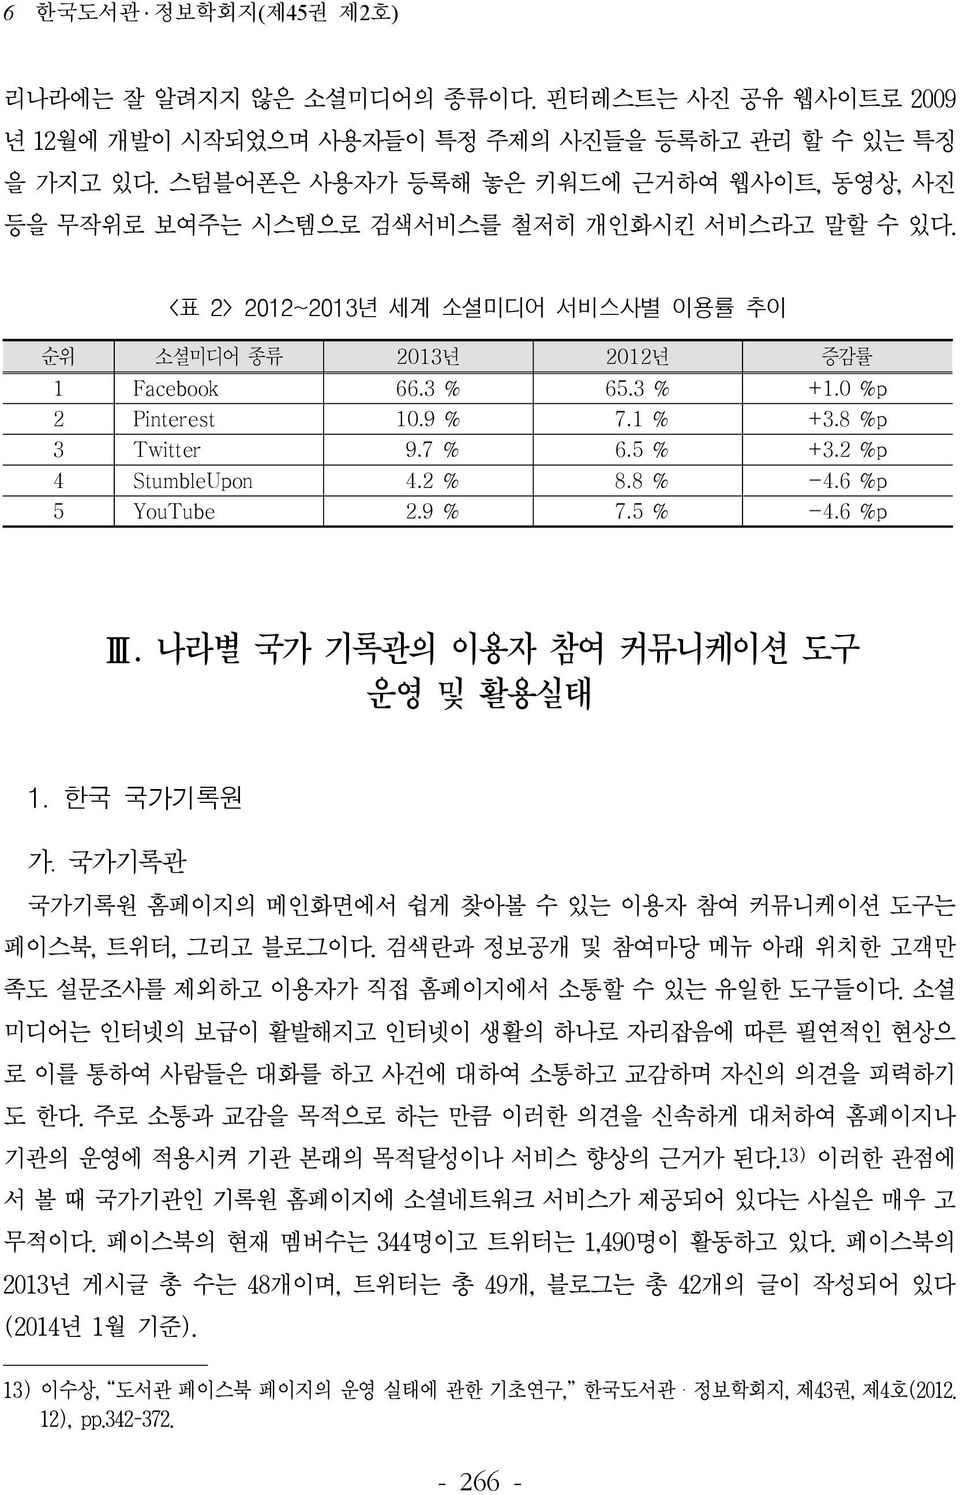 0 %p 2 Pinterest 10.9 % 7.1 % +3.8 %p 3 Twitter 9.7 % 6.5 % +3.2 %p 4 StumbleUpon 4.2 % 8.8 % -4.6 %p 5 YouTube 2.9 % 7.5 % -4.6 %p Ⅲ. 나라별 국가 기록관의 이용자 참여 커뮤니케이션 도구 운영 및 활용실태 1. 한국 국가기록원 가.